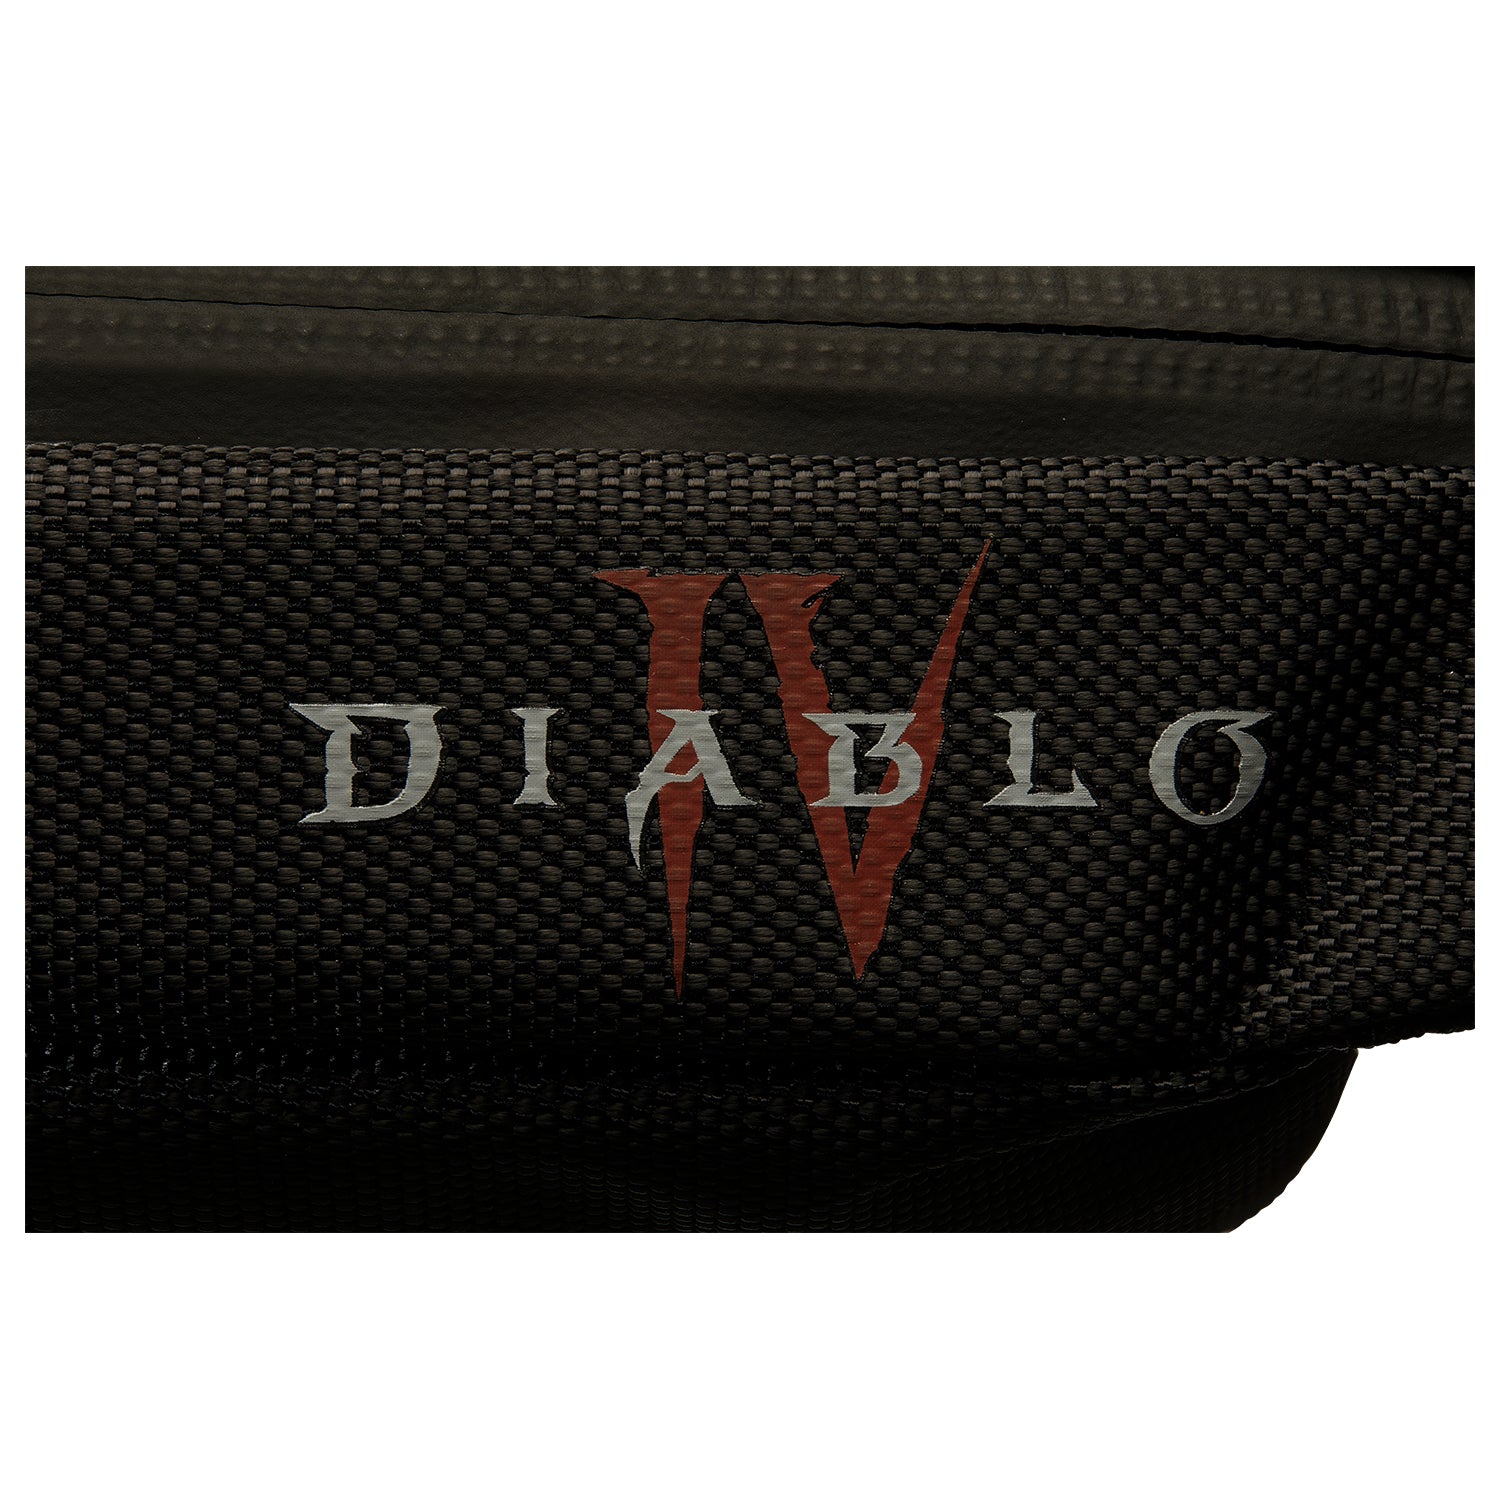 Diablo IV Sling Bag - Close-Up View